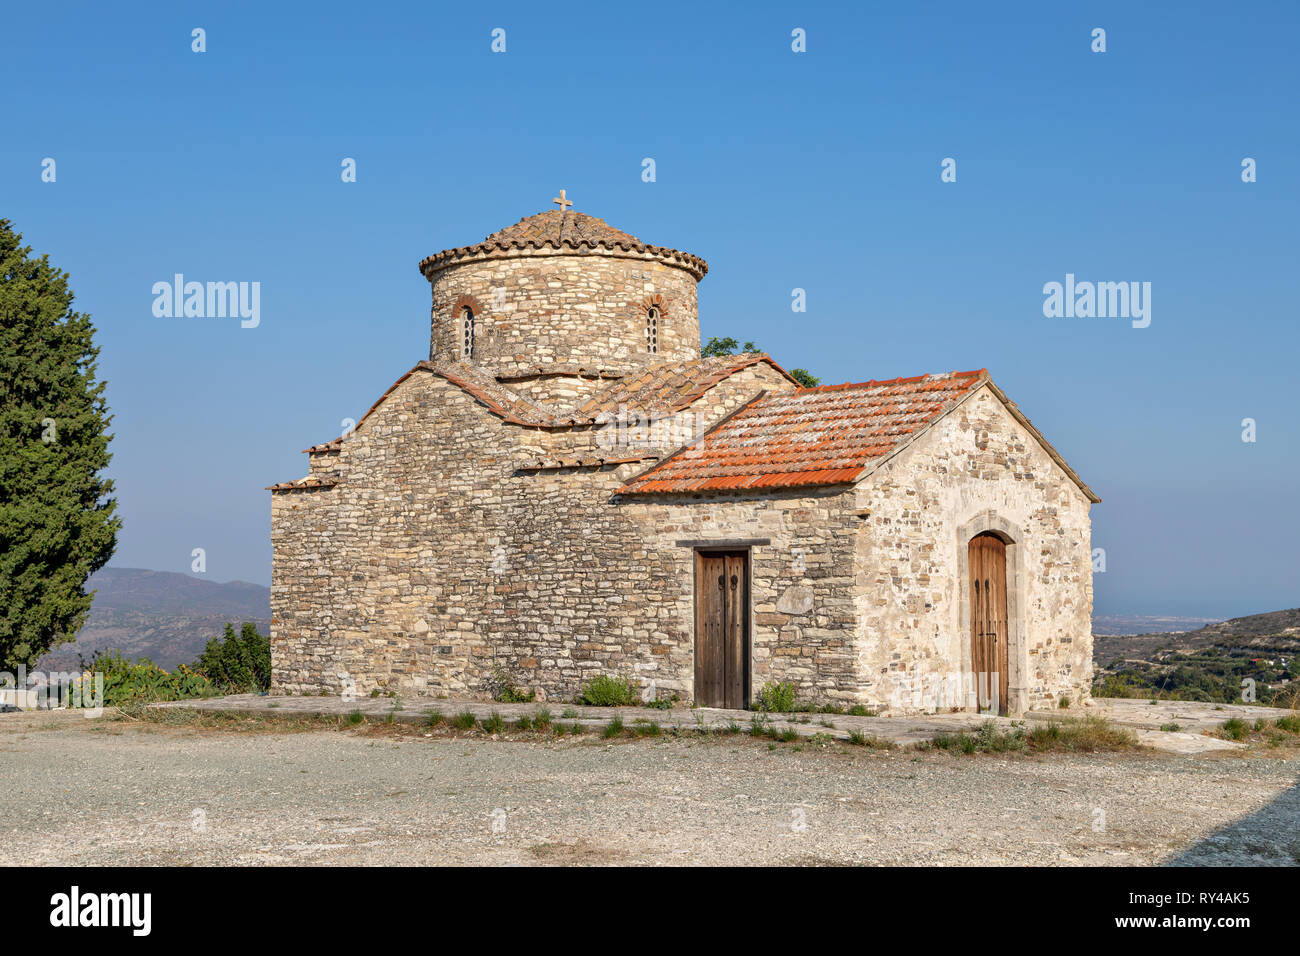 Byzantine style Archangel Michael 12th century church in Kato (Lower) Lefkara village famous for its needlework, Cyprus Stock Photo